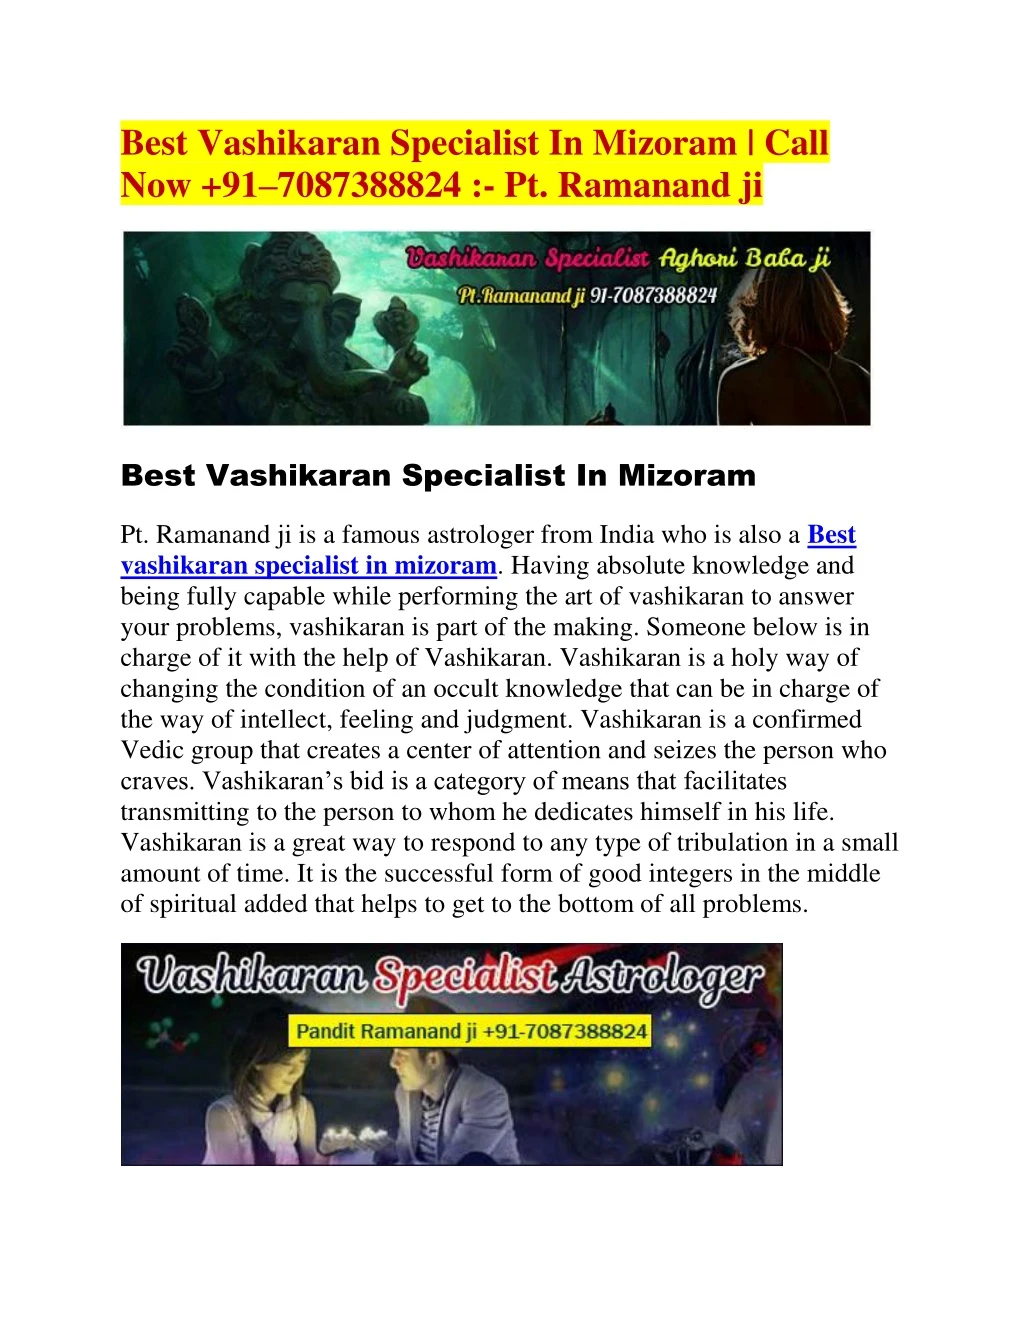 best vashikaran specialist in mizoram call